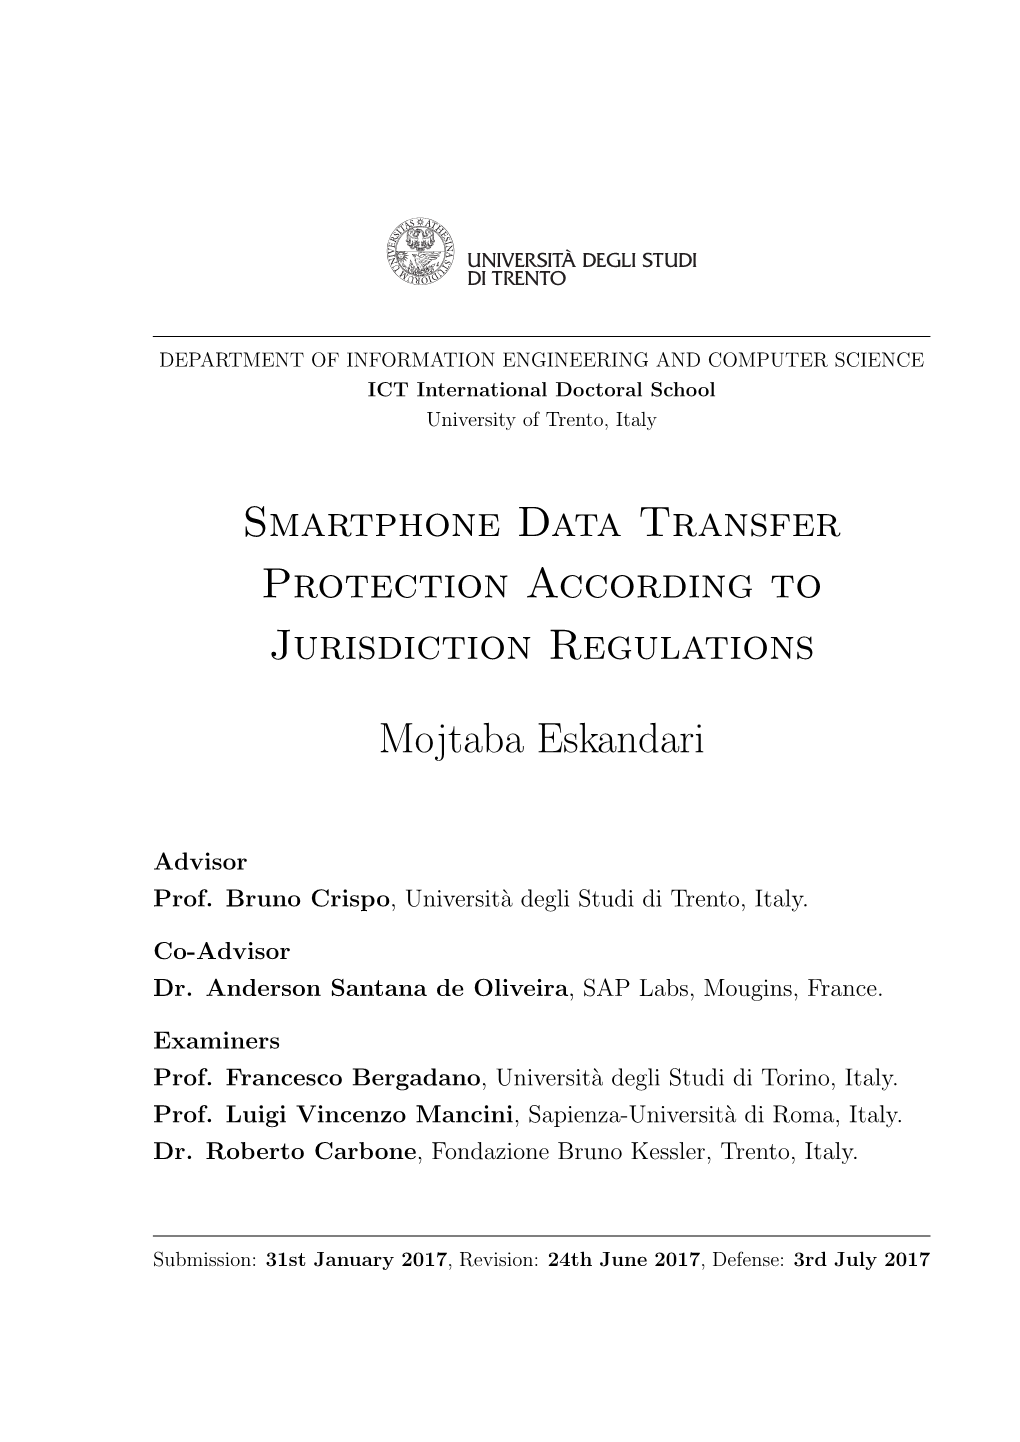 Smartphone Data Transfer Protection According to Jurisdiction Regulations